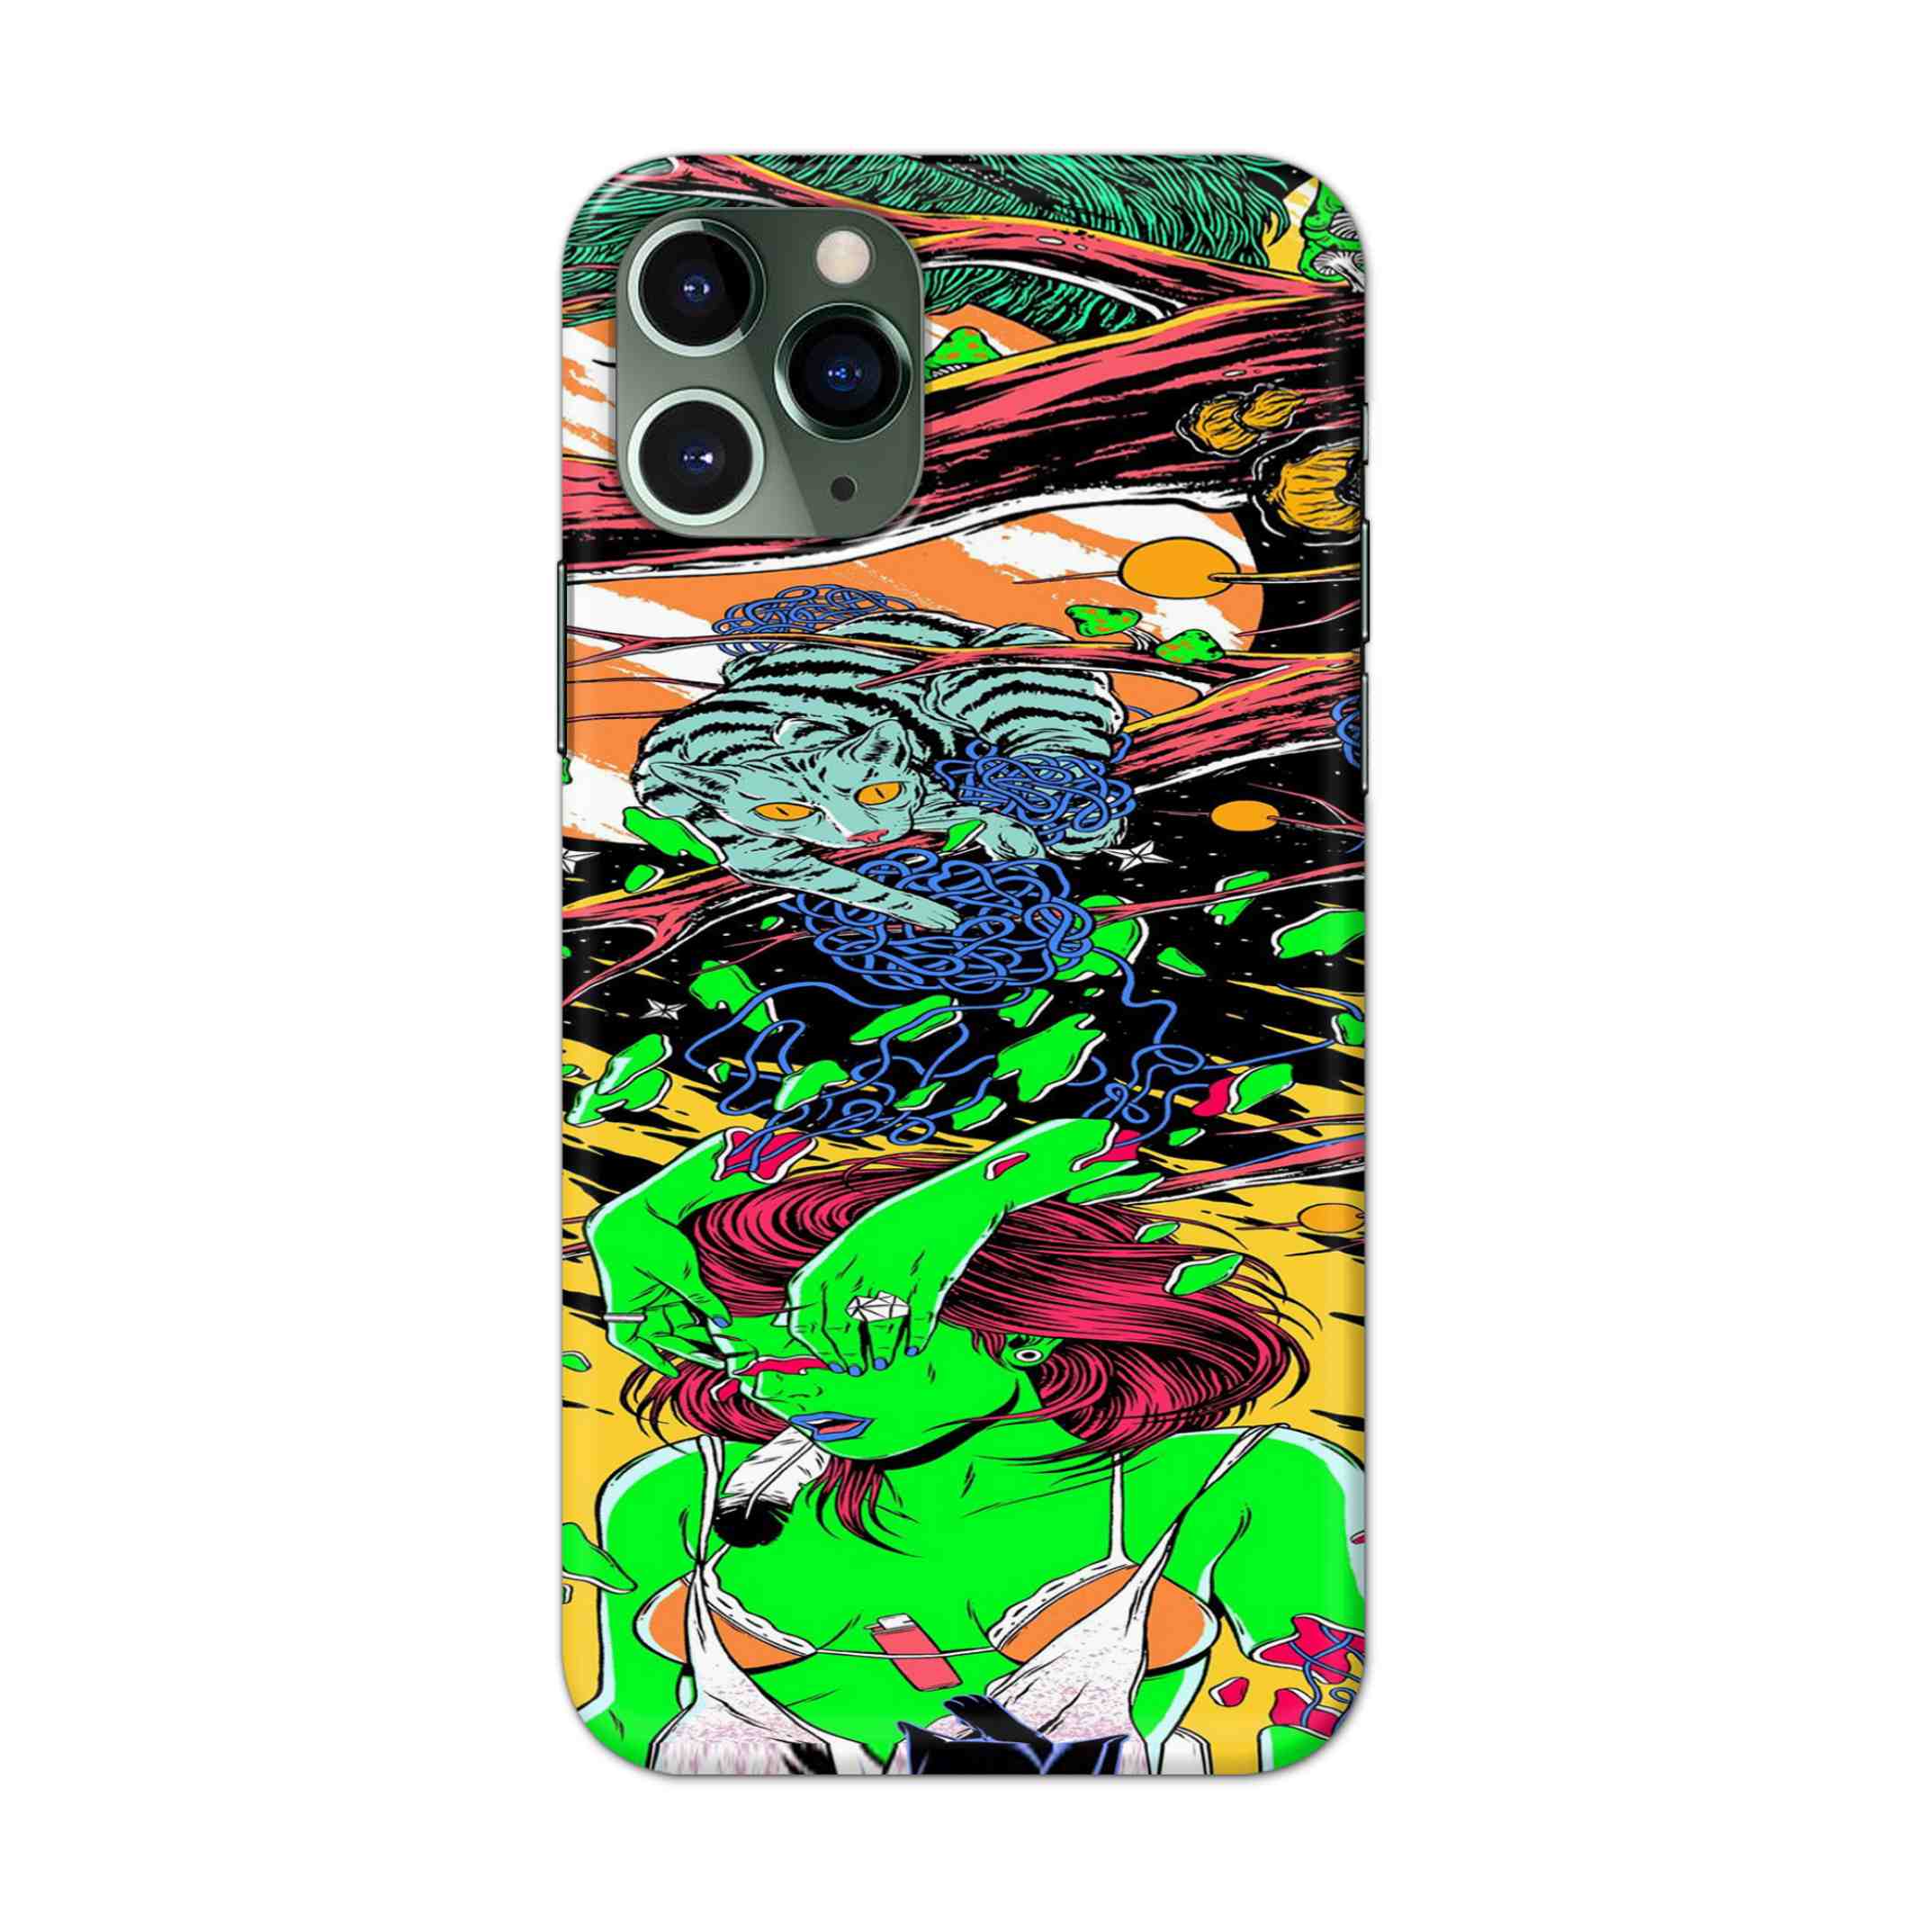 Buy Green Girl Art Hard Back Mobile Phone Case/Cover For iPhone 11 Pro Online